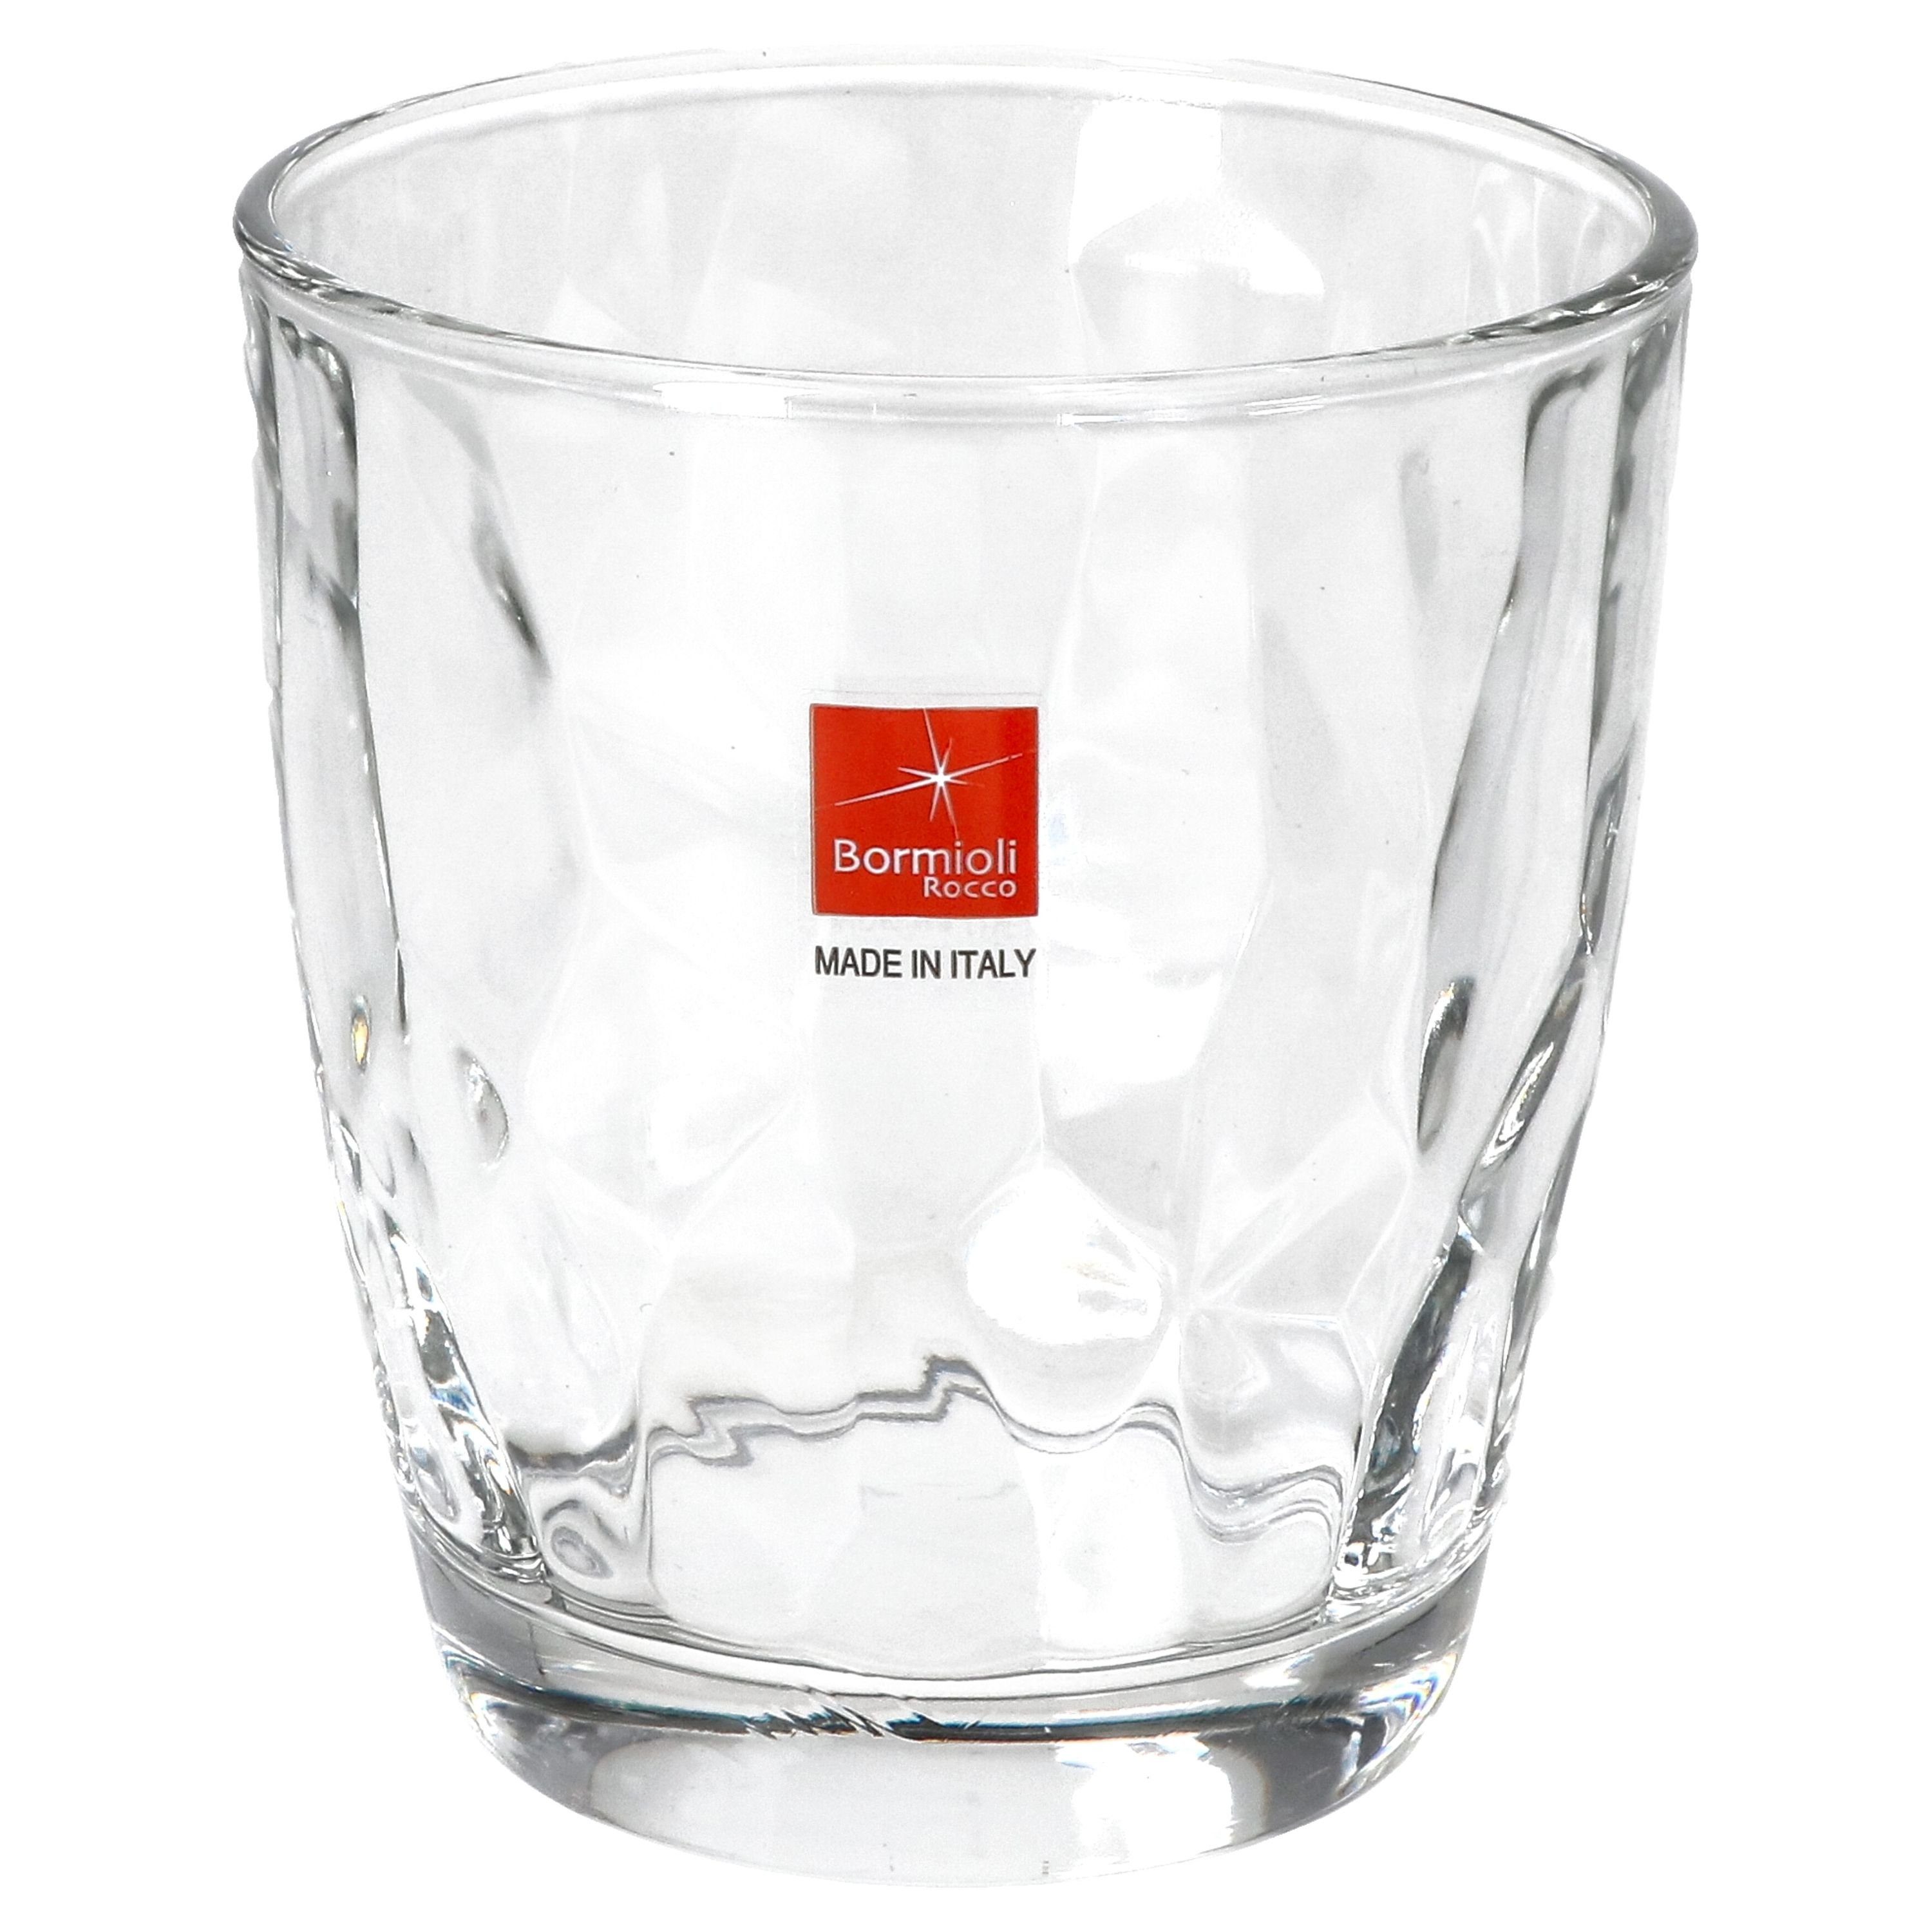 MamboCat Glas 4er Glas Whisky, Diamond Gin Trinkglas Set 390ml D.O.F. Cocktail Transparent